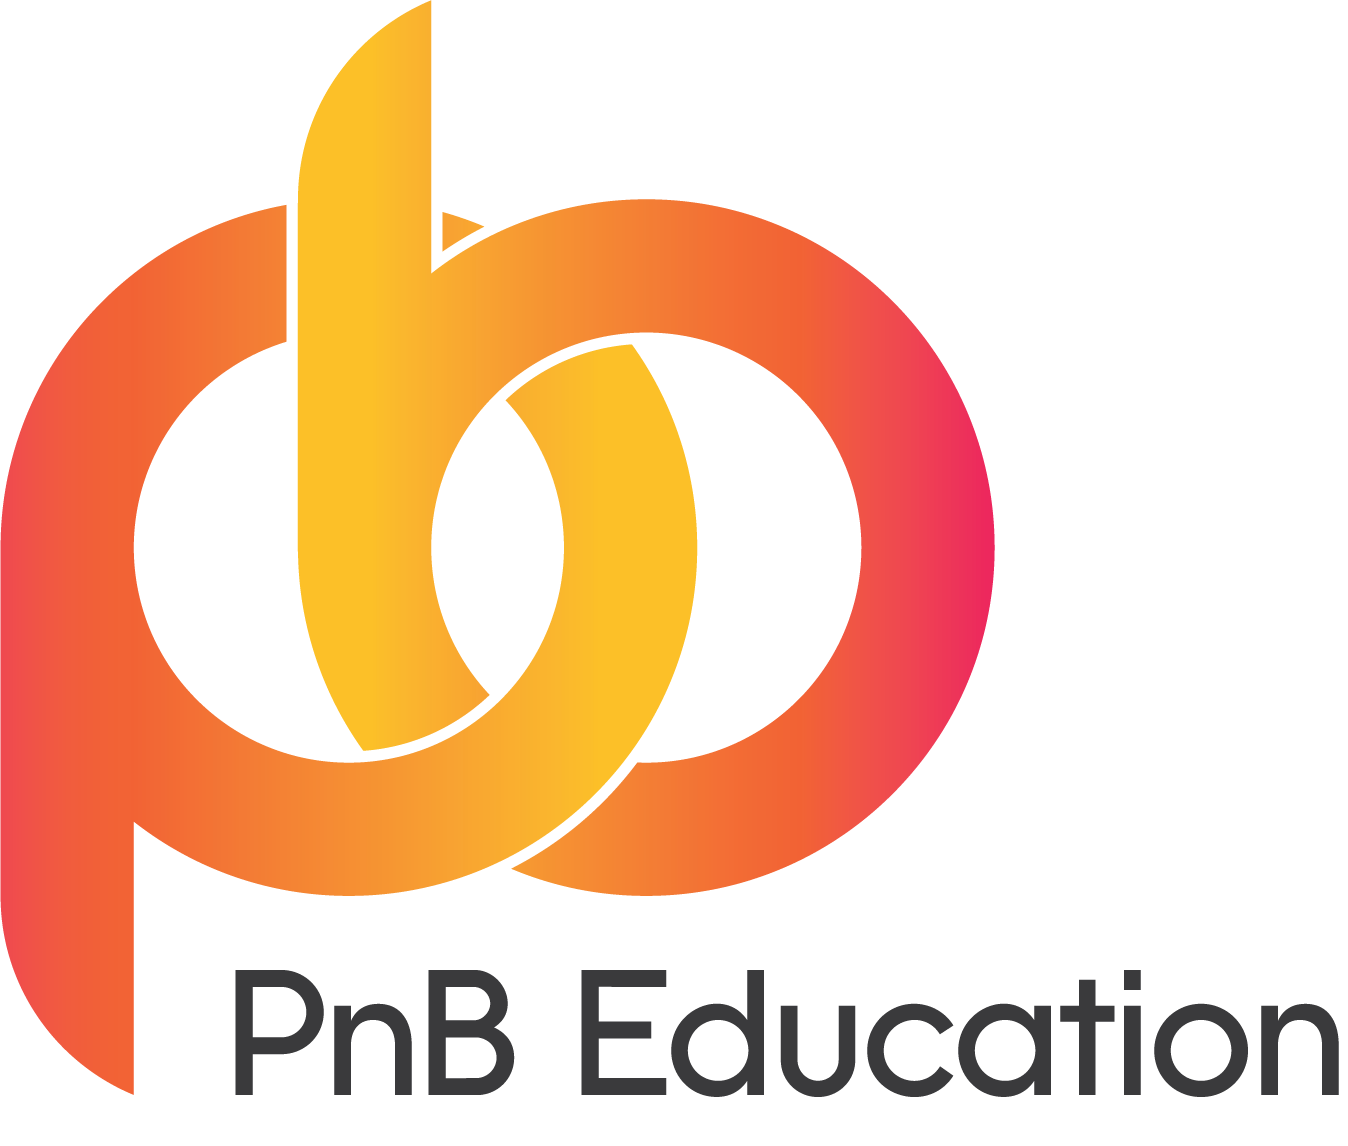 PnB Education